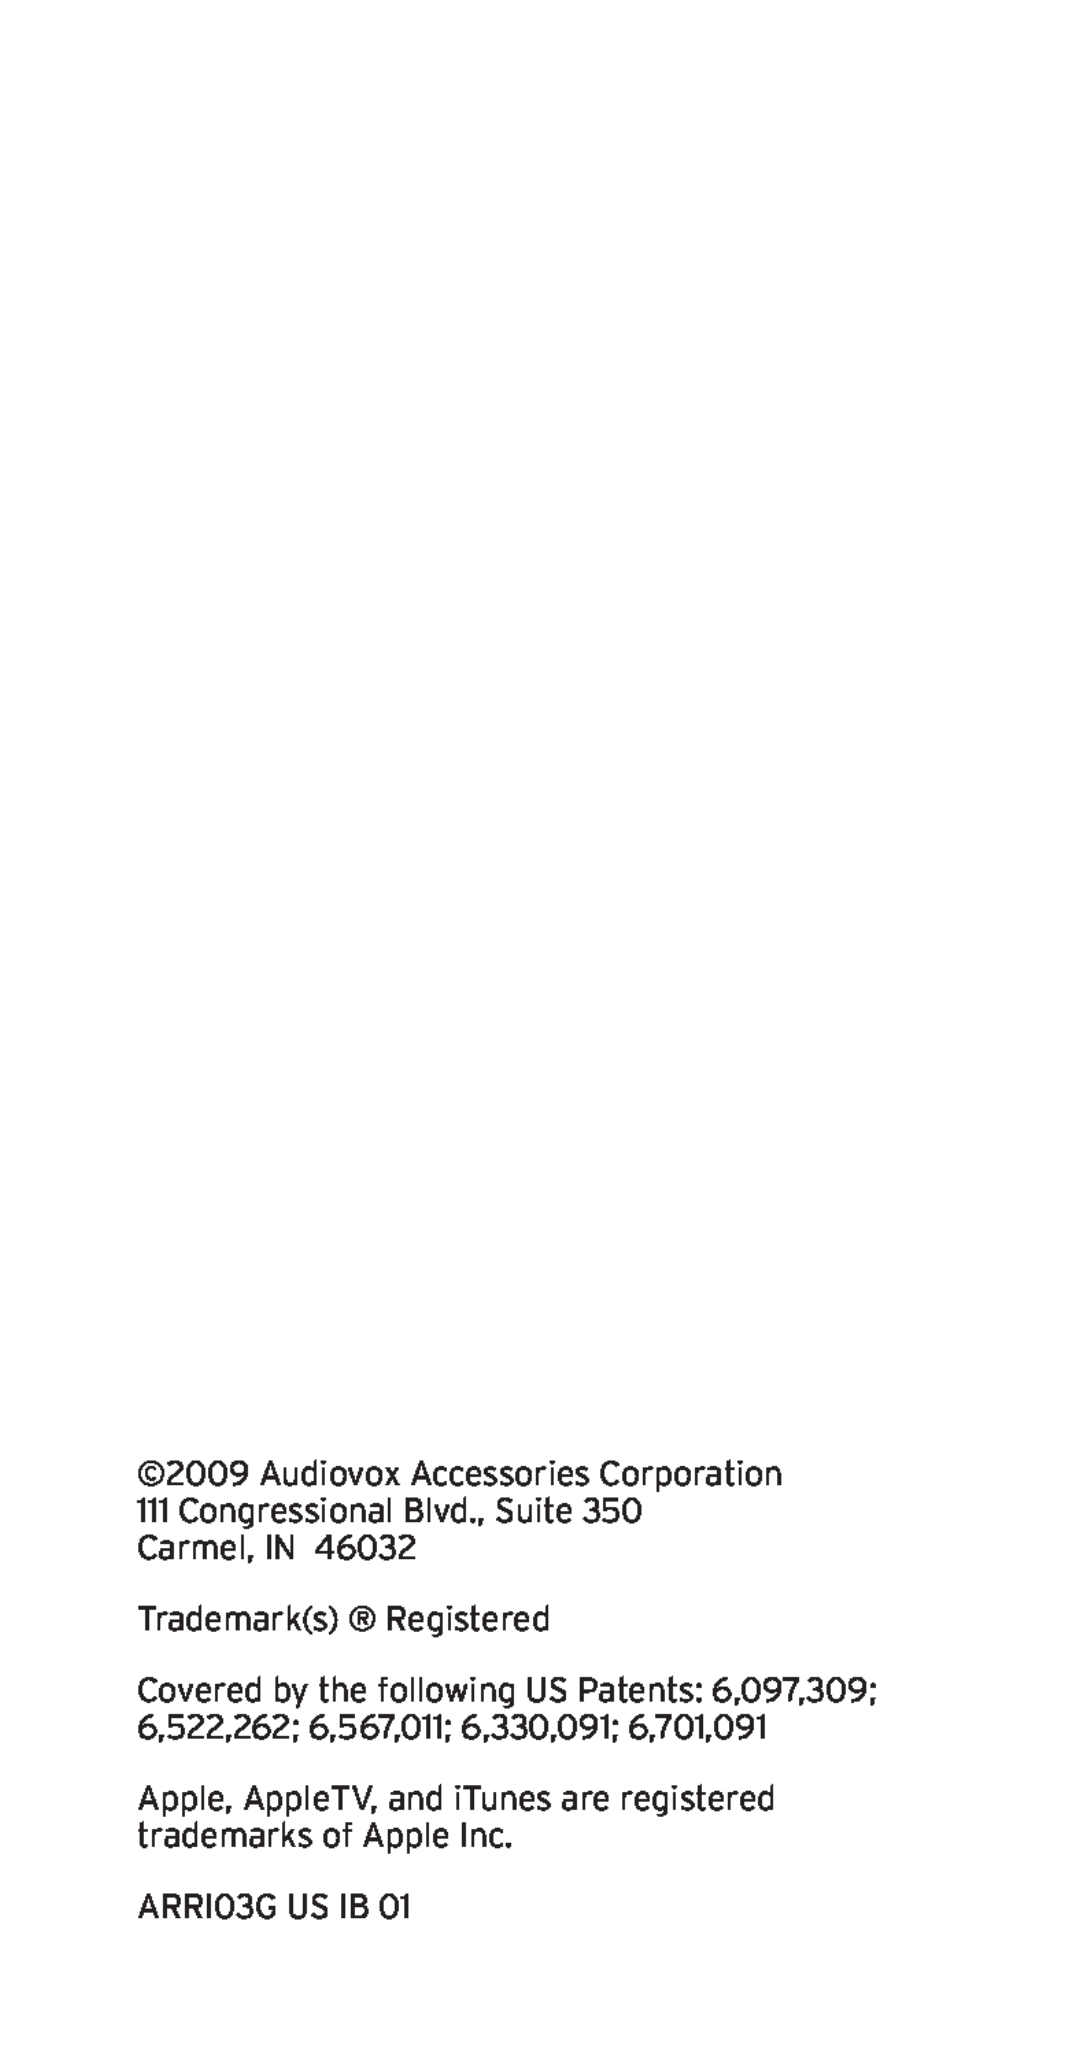 Acoustic Research ARi3G manual Audiovox Accessories Corporation 111 Congressional Blvd., Suite, ARRI03G US IB 